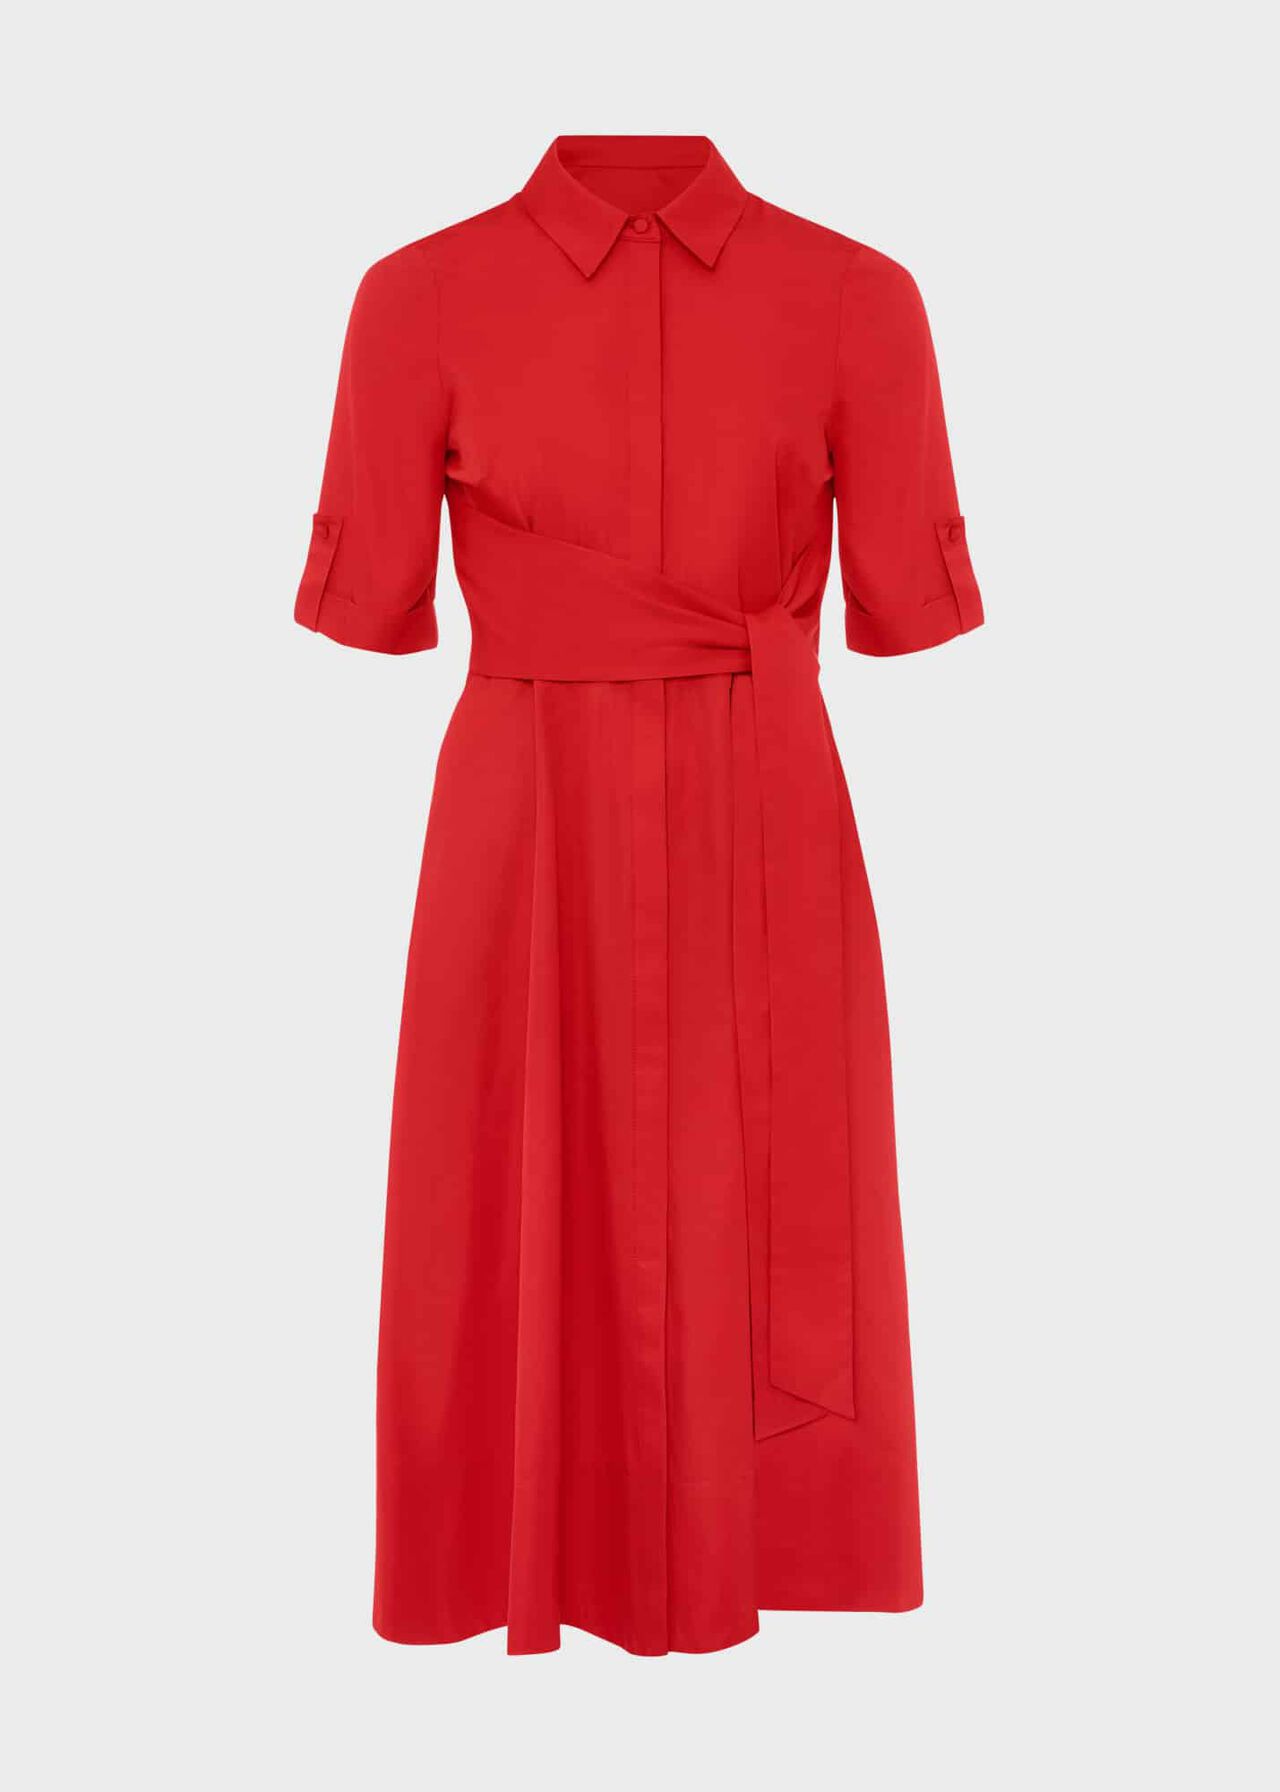 Tarianna Dress, Red, hi-res